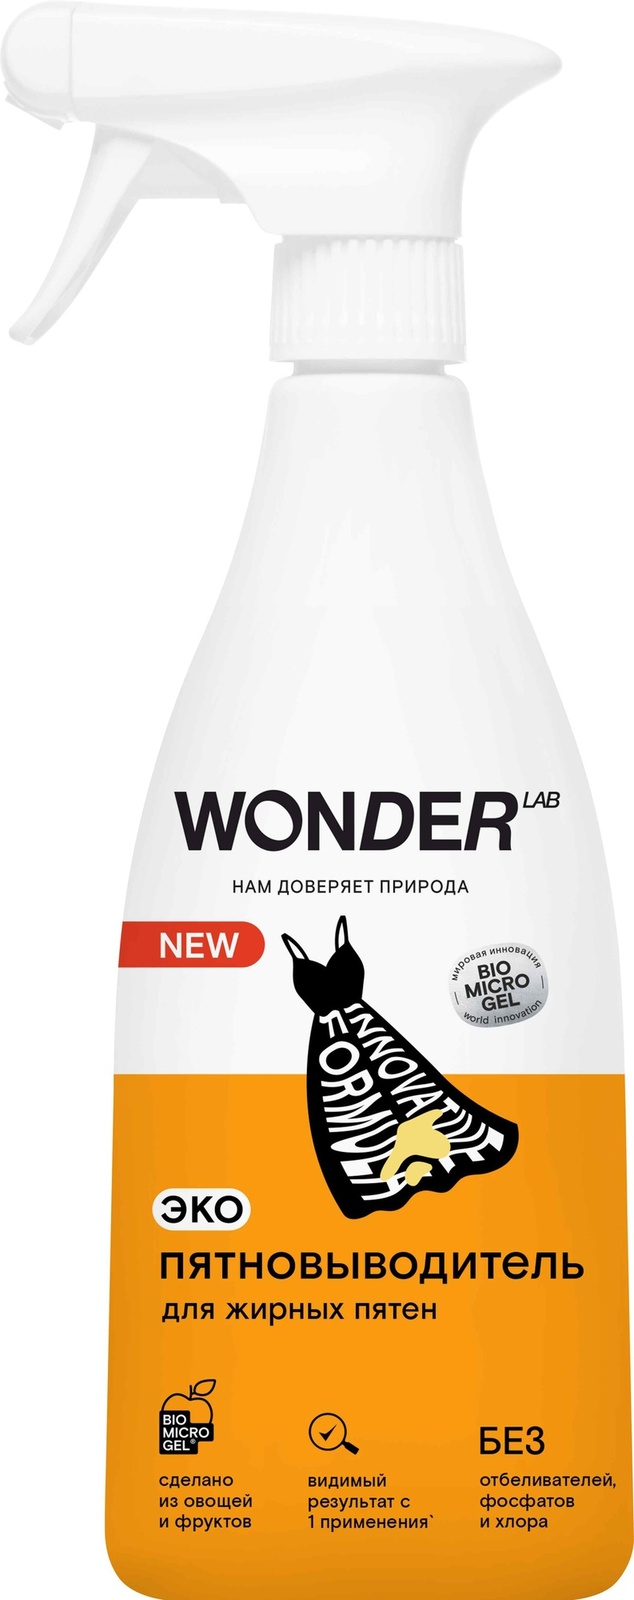 Wonder lab Wonder lab экопятновыводитель для жирных пятен (550 мл)